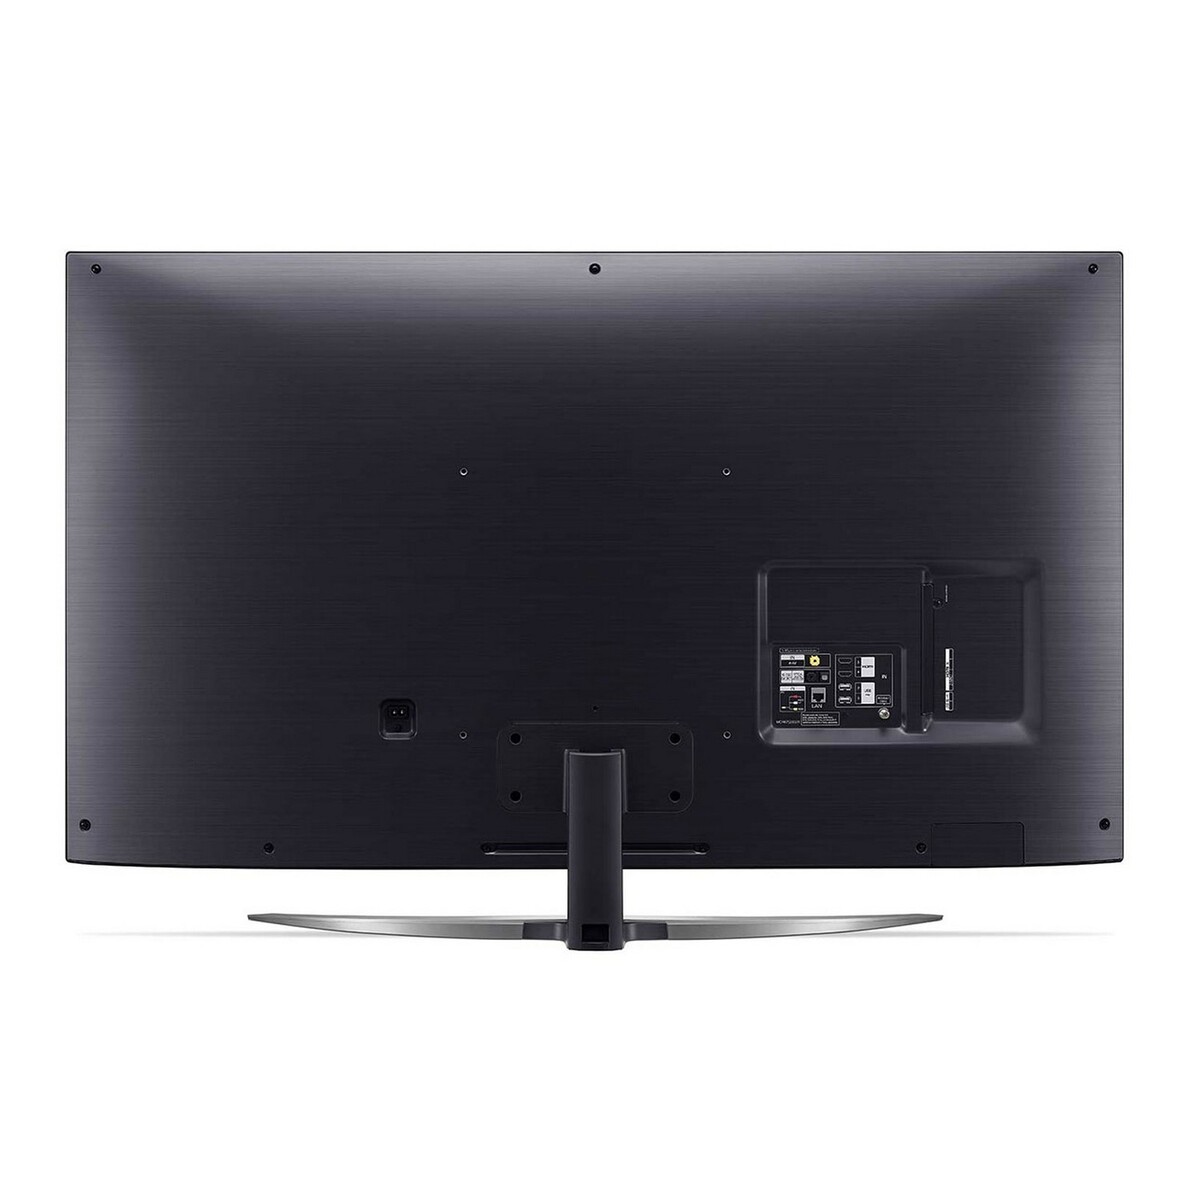 LG 4K Ultra HD LED Smart TV 55SM8100PTA 55"